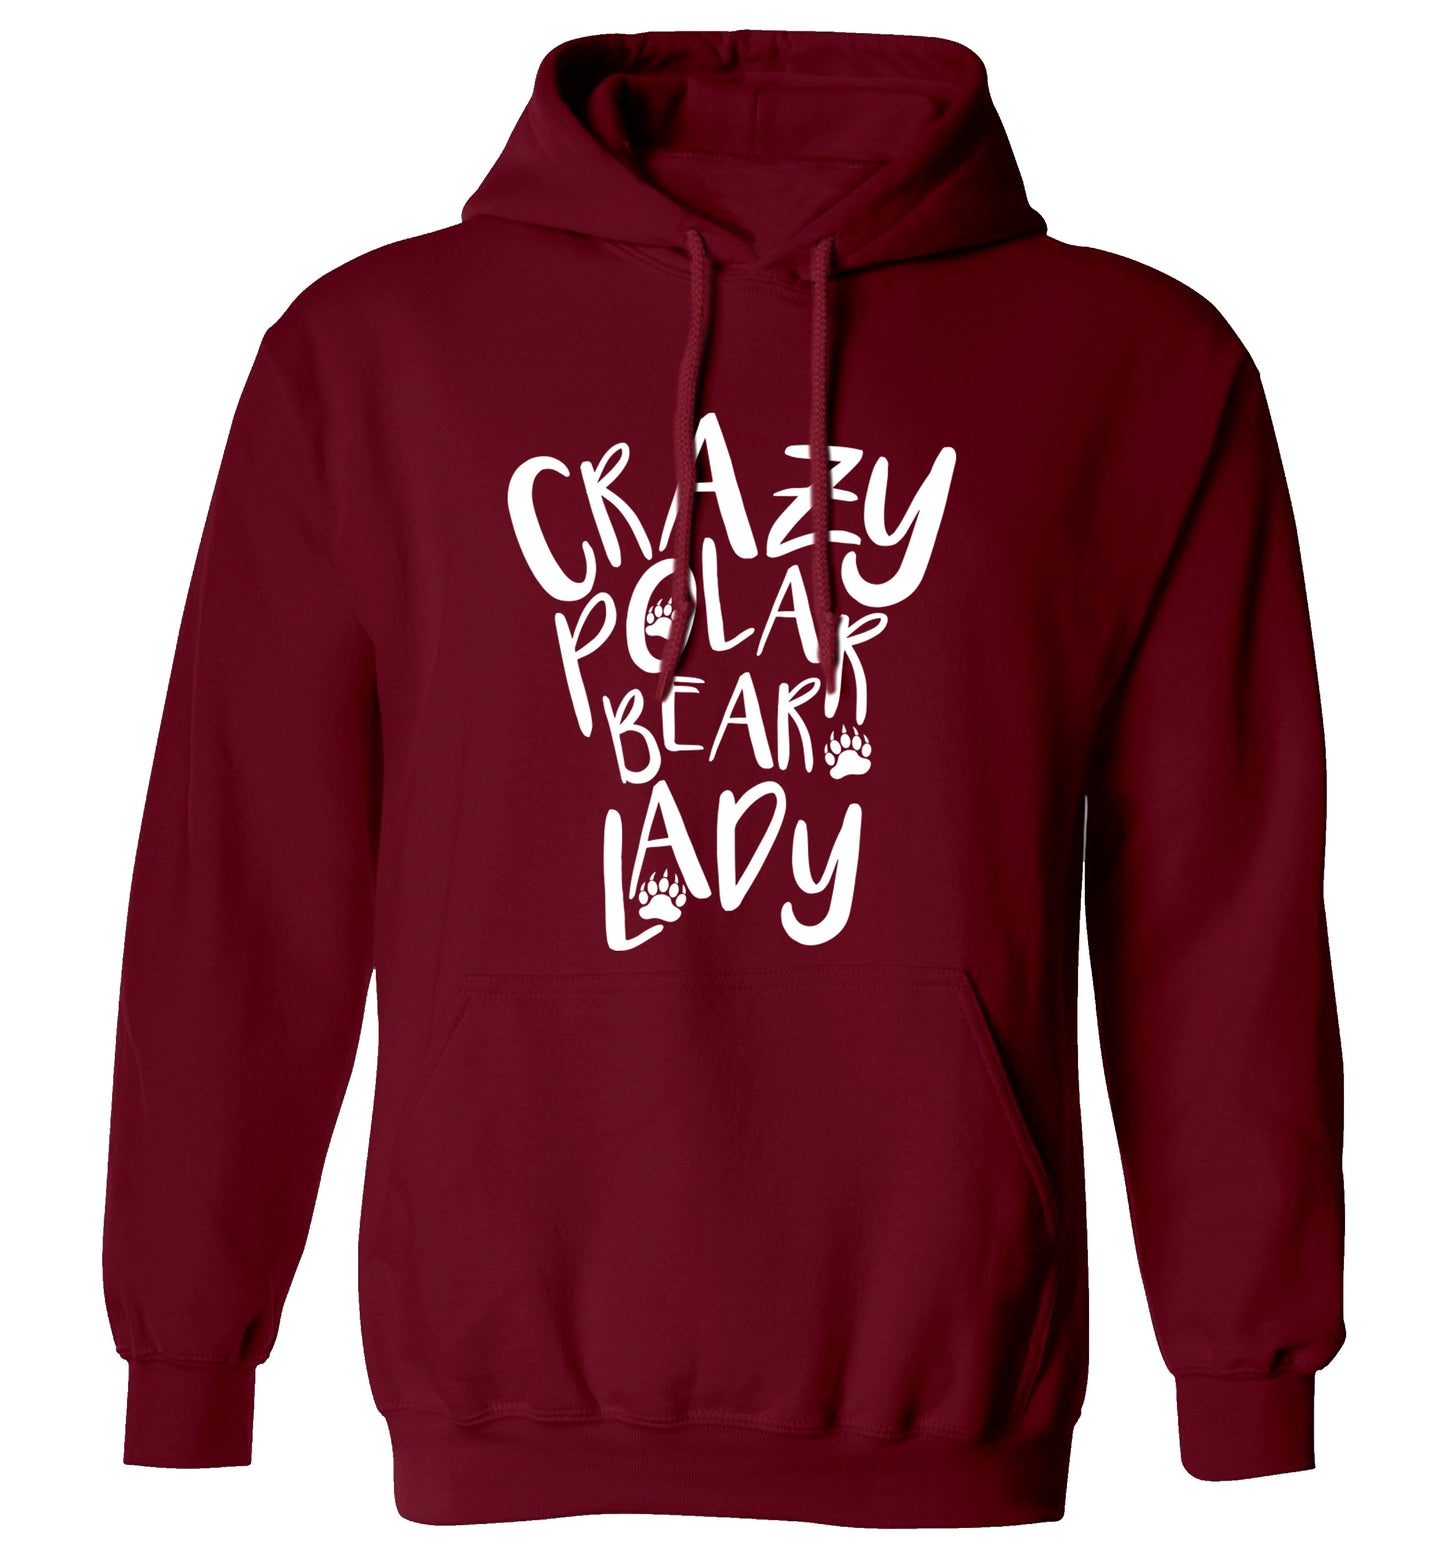 Crazy polar bear lady adults unisex maroon hoodie 2XL